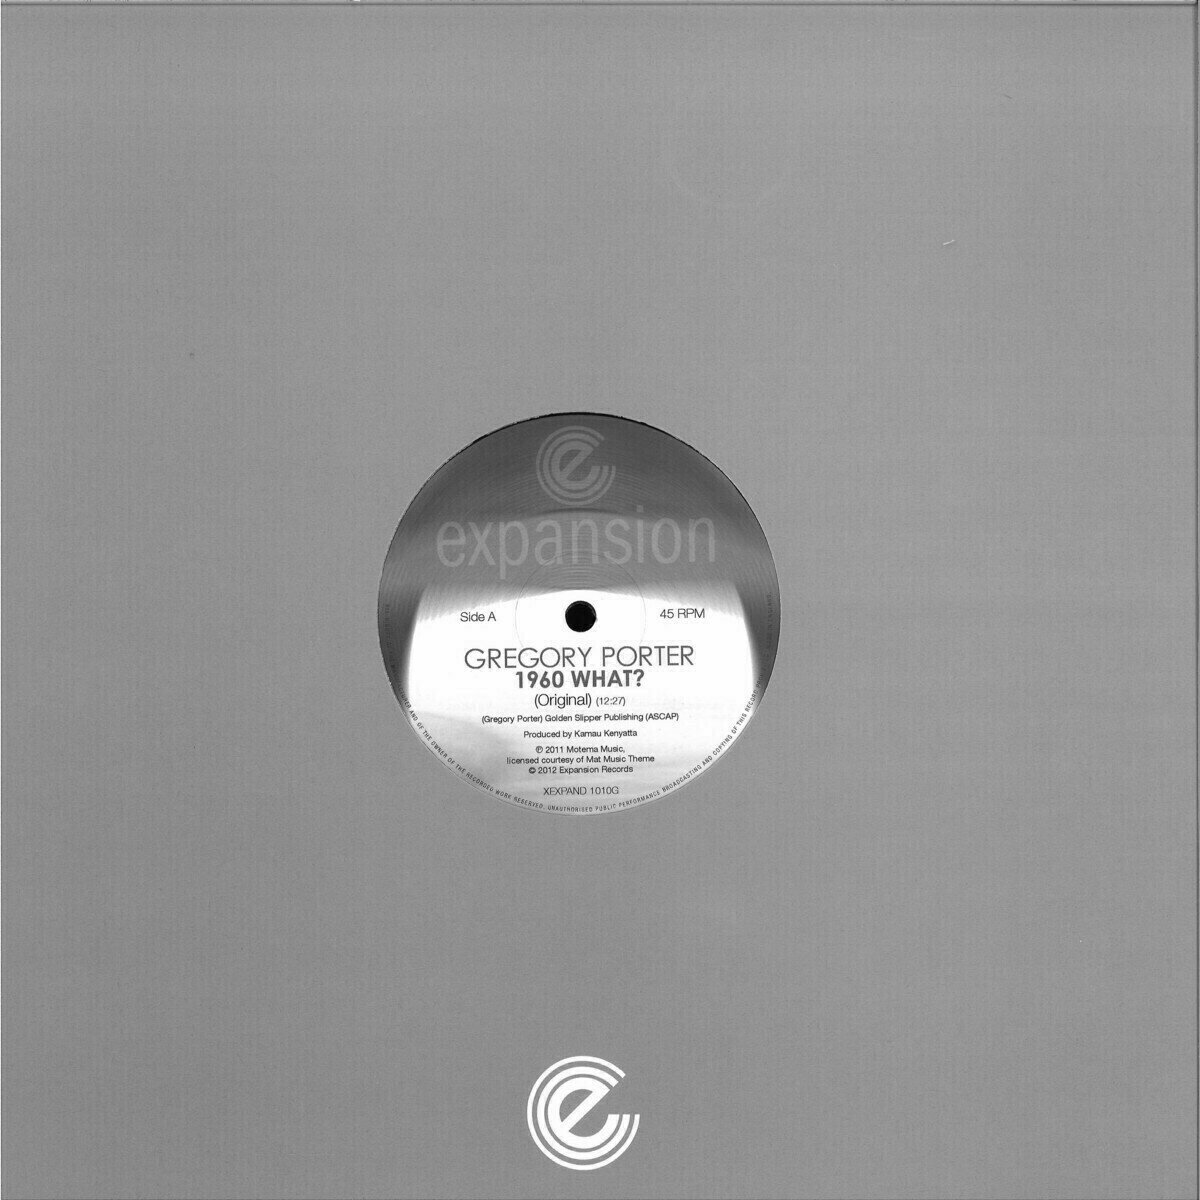 LP platňa Gregory Porter - 1960 What? (Original Mix) (12" Vinyl) LP platňa